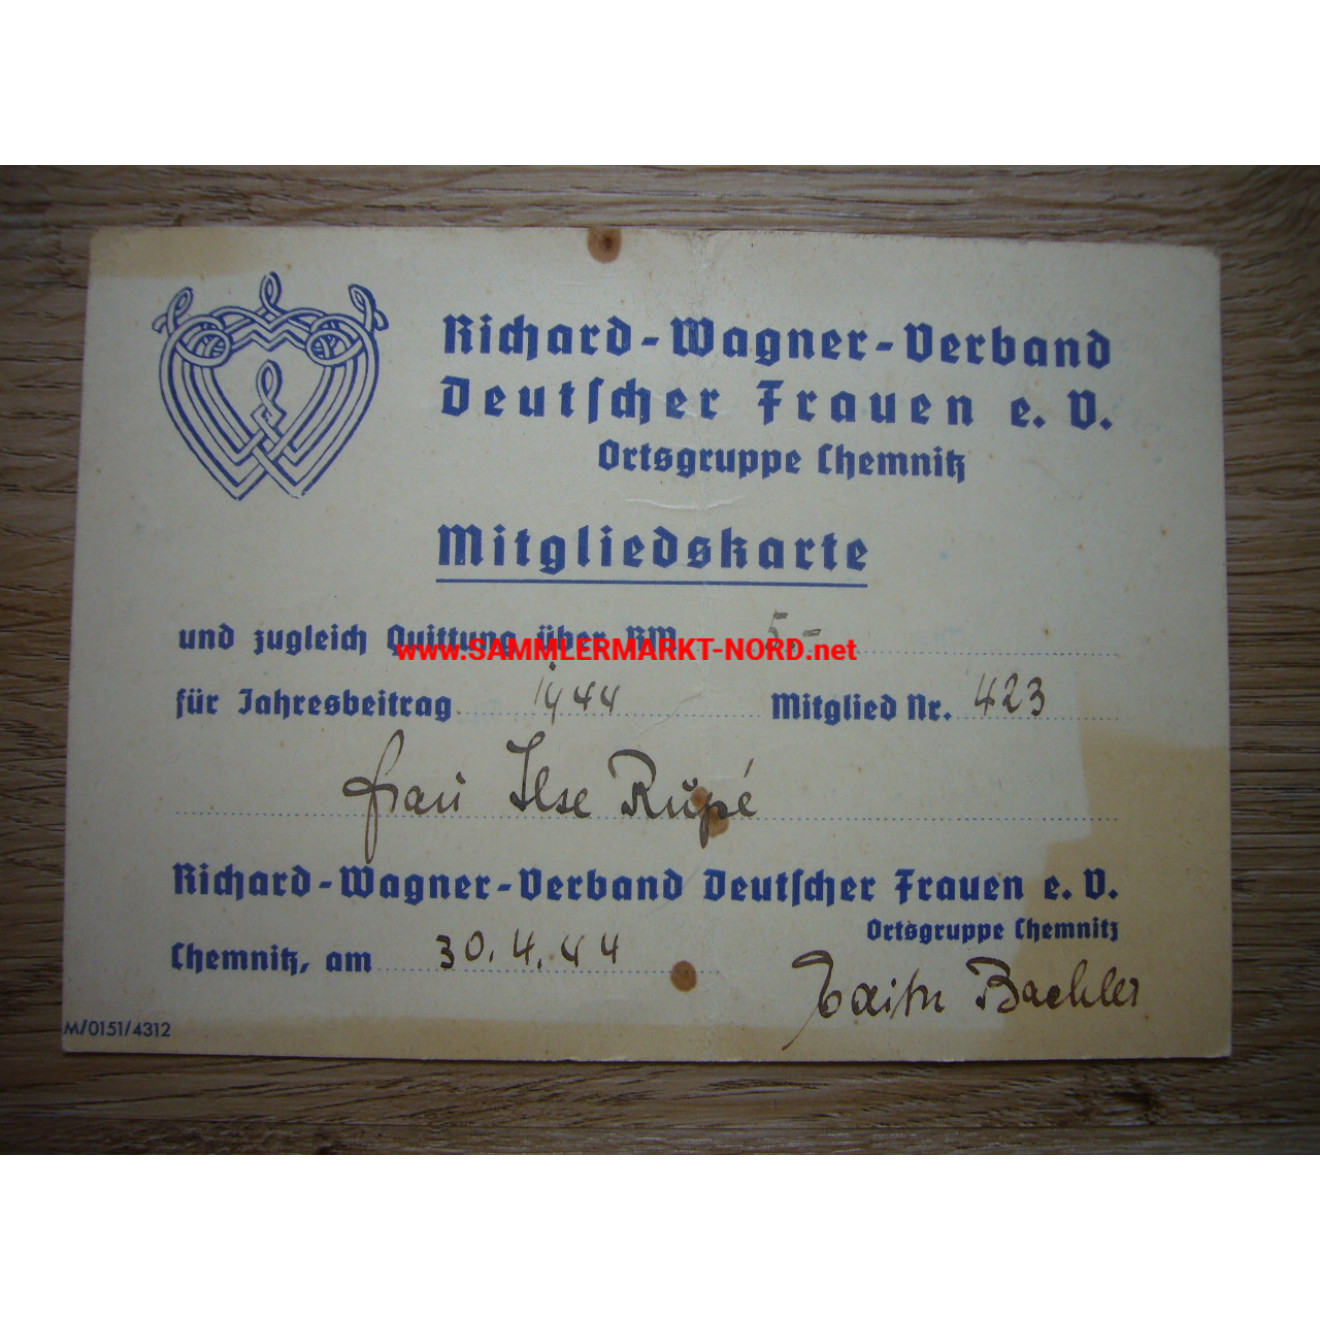 Richard Wagner Association of German Women - Membership Card